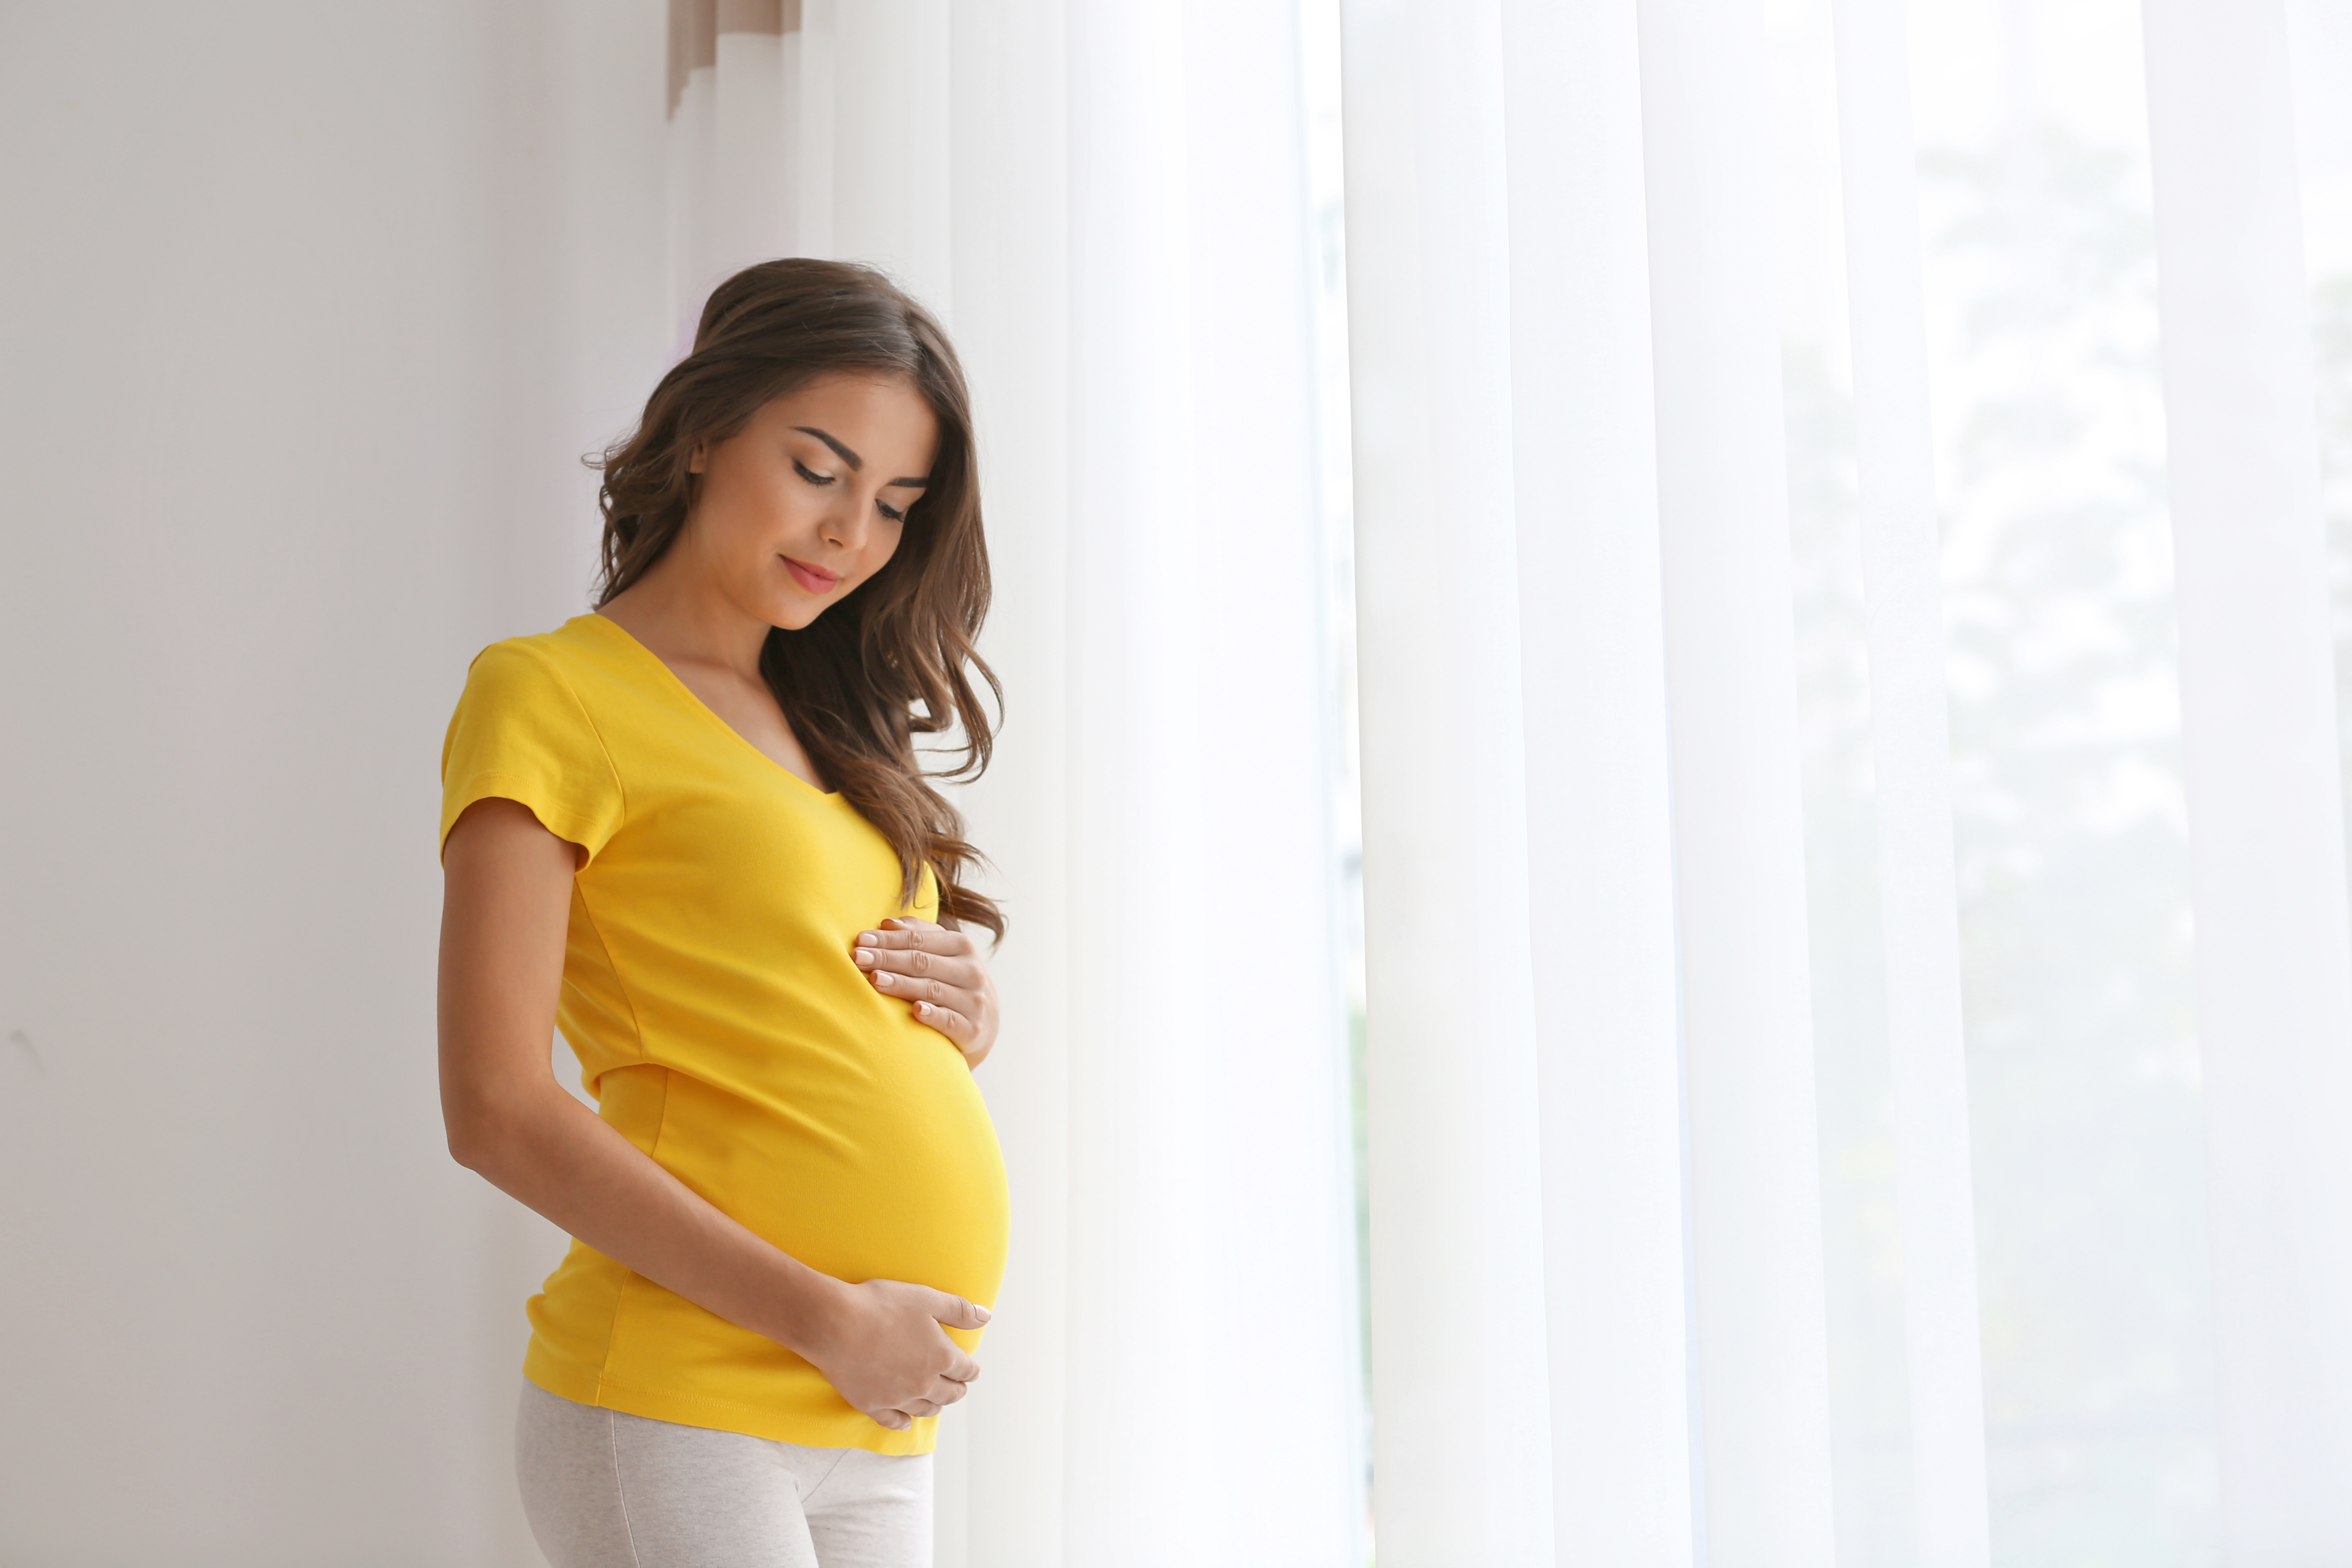 Una mujer embarazada junto a una ventana | Fuente: Shutterstock